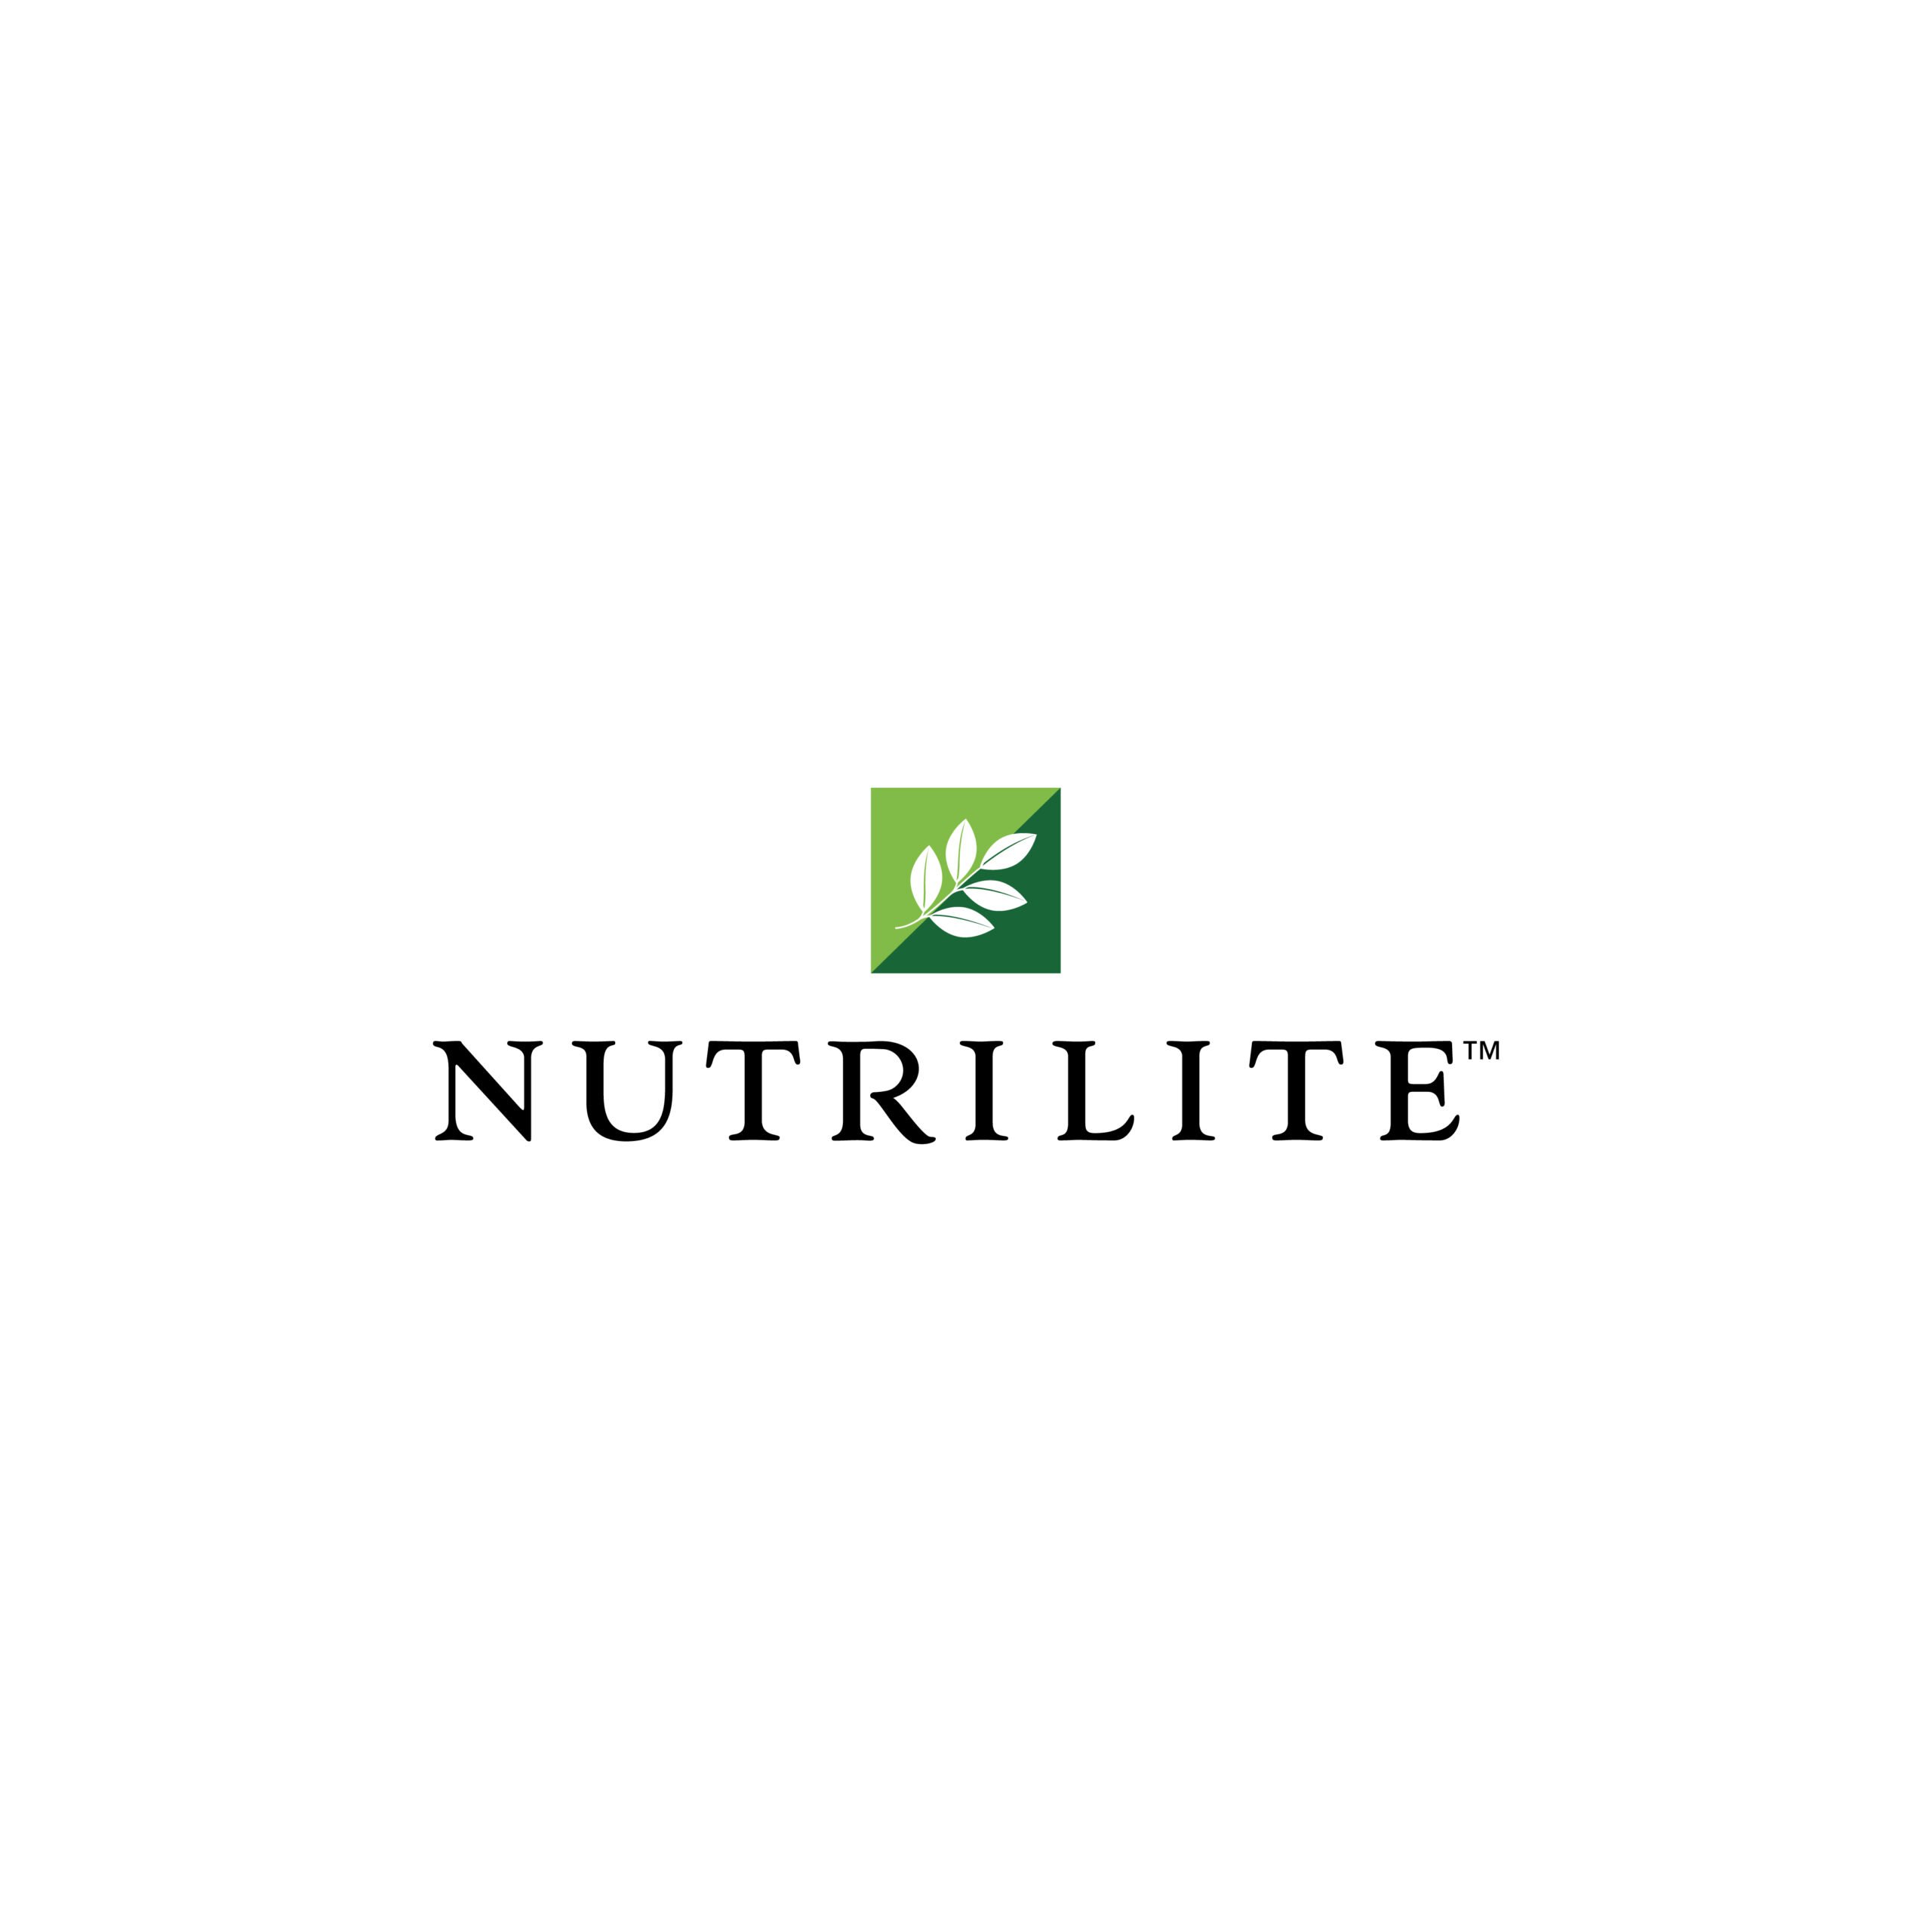 Nutrilite Logo Vector